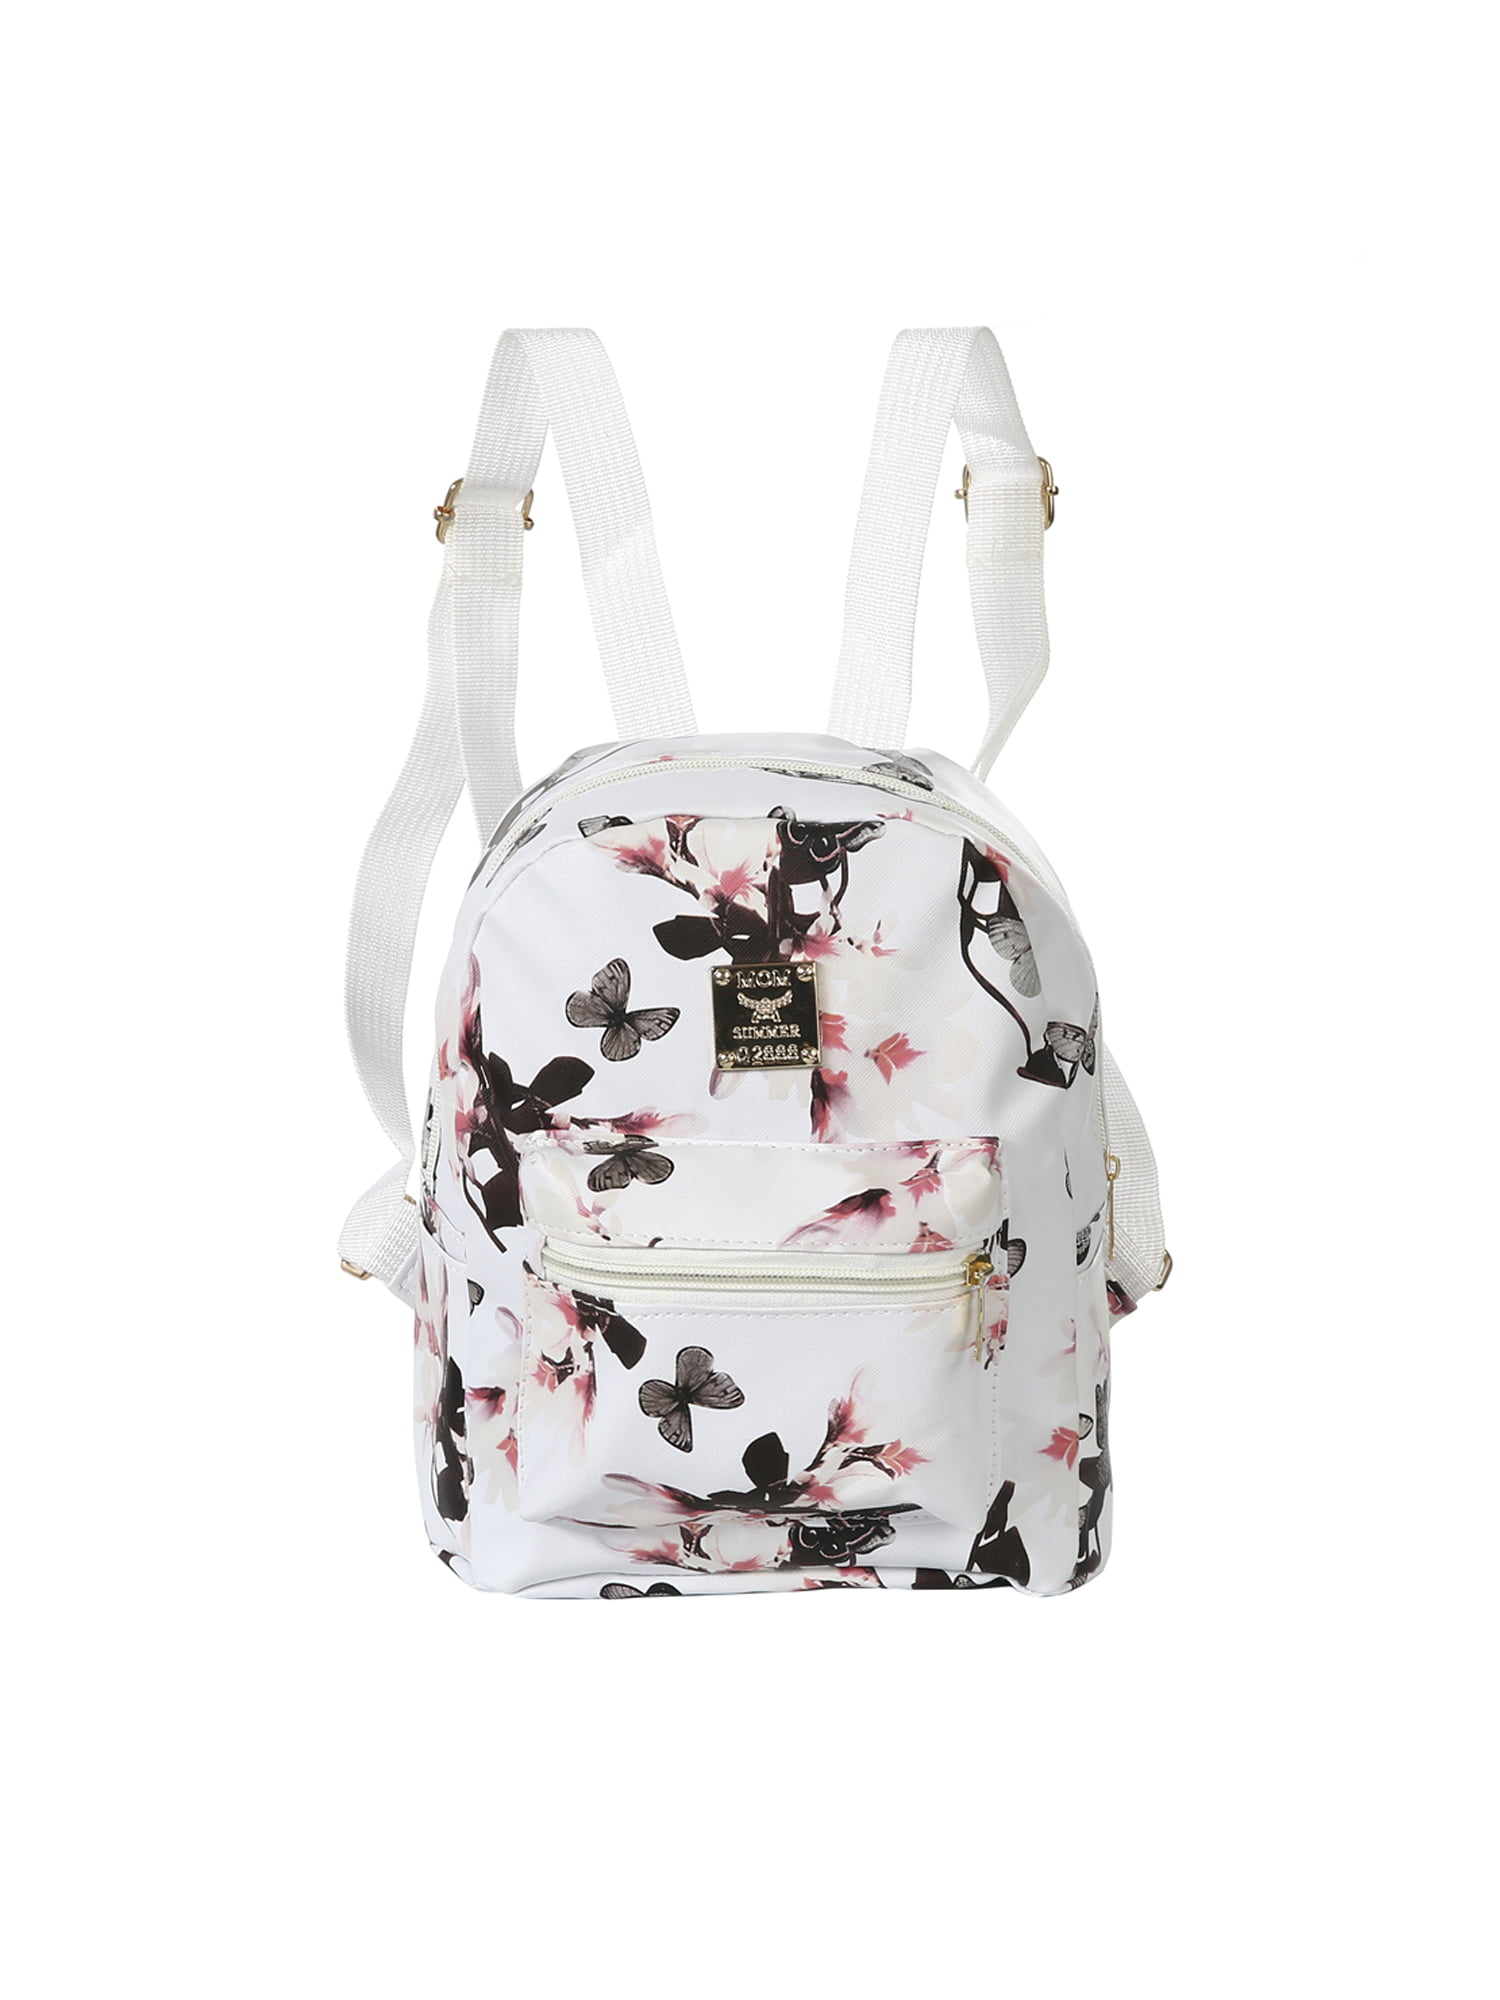 Cotton Drawstring Backpack/ Backpack/ Bags Details about   Boho Backpack 